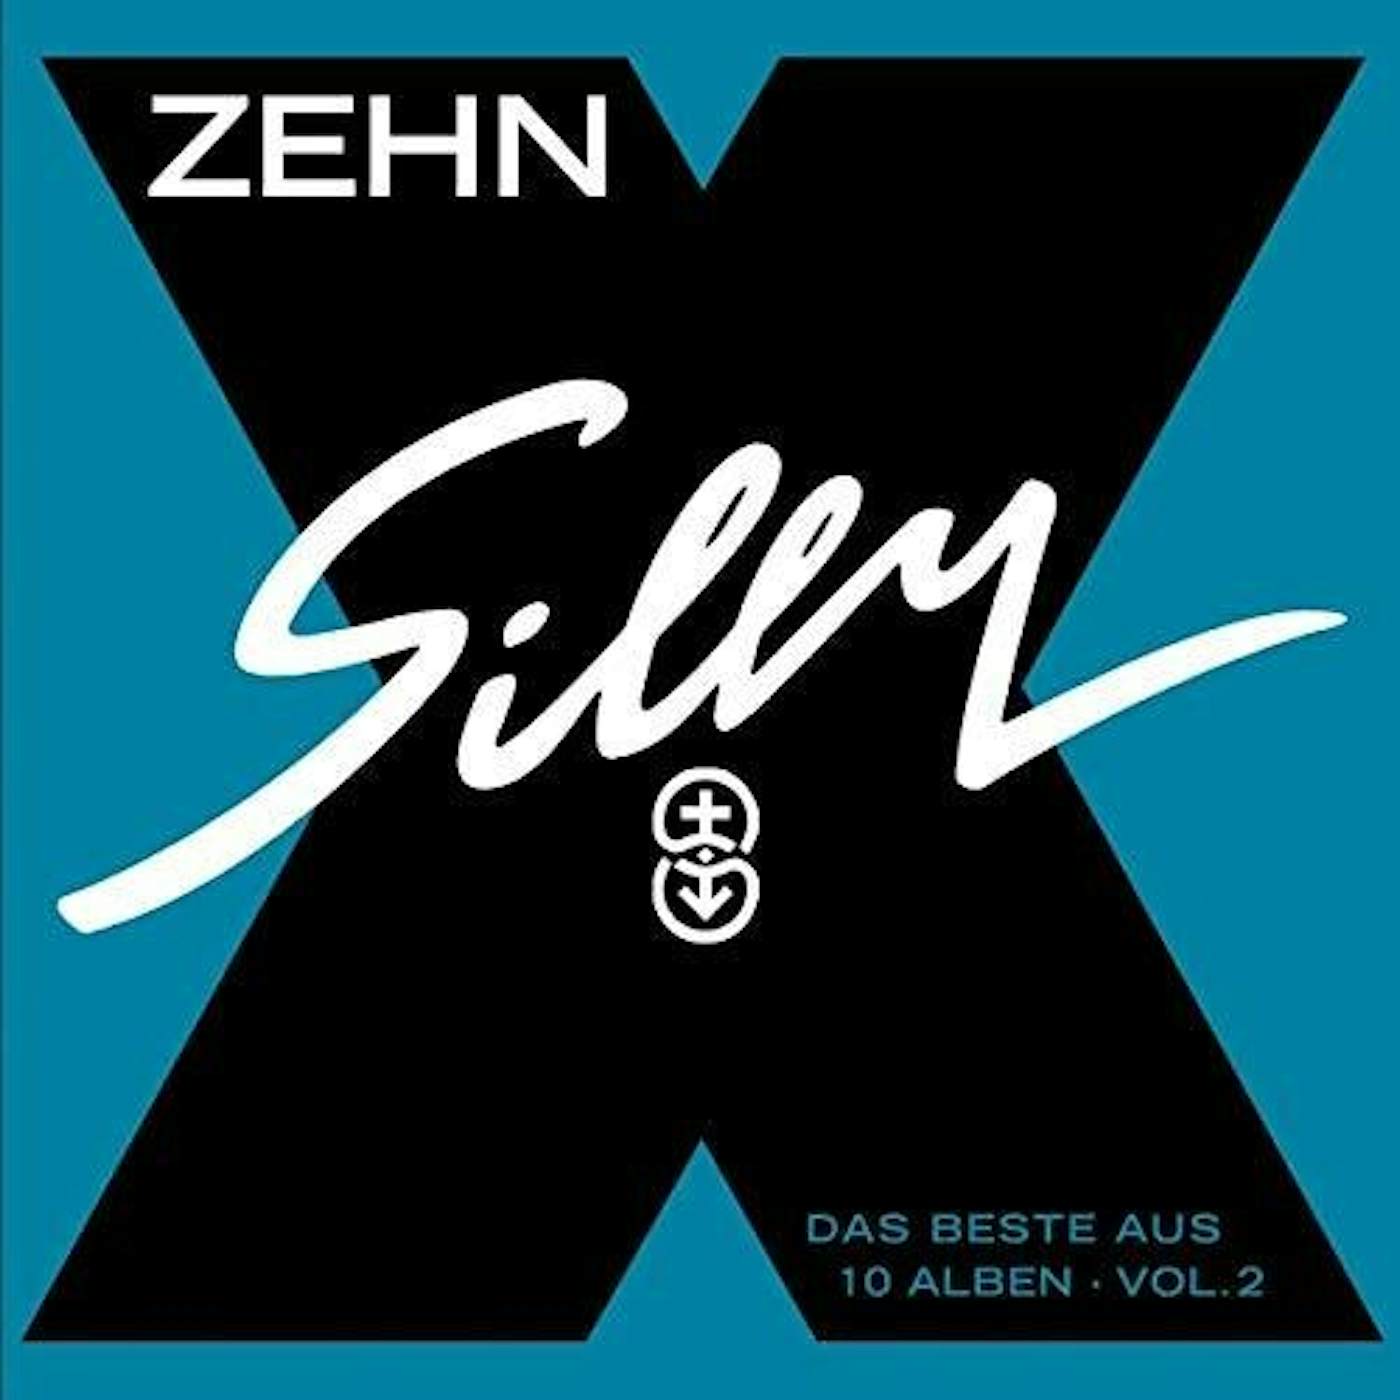 Silly ZEHN VOL 2 CD